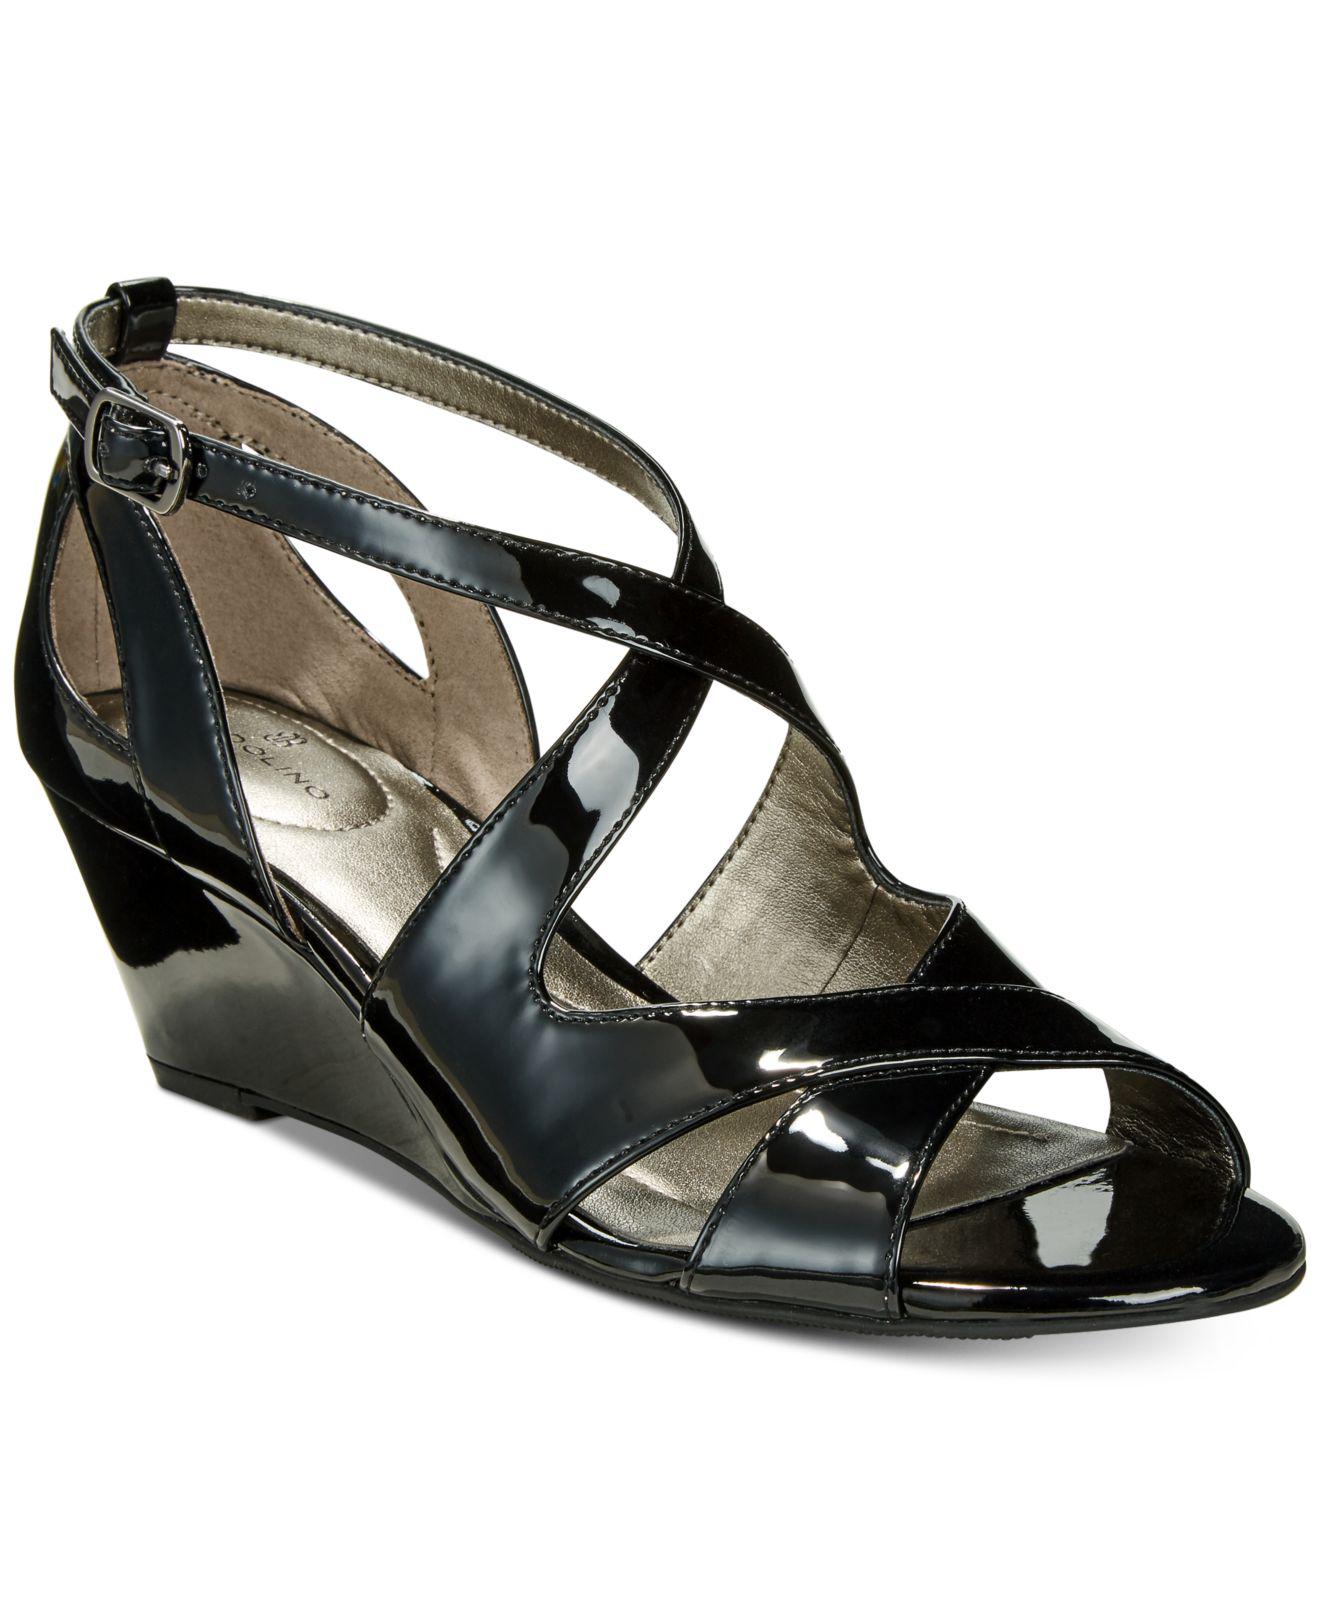 Bandolino Denim Omit Wedge Sandals in Black Patent (Black) - Lyst